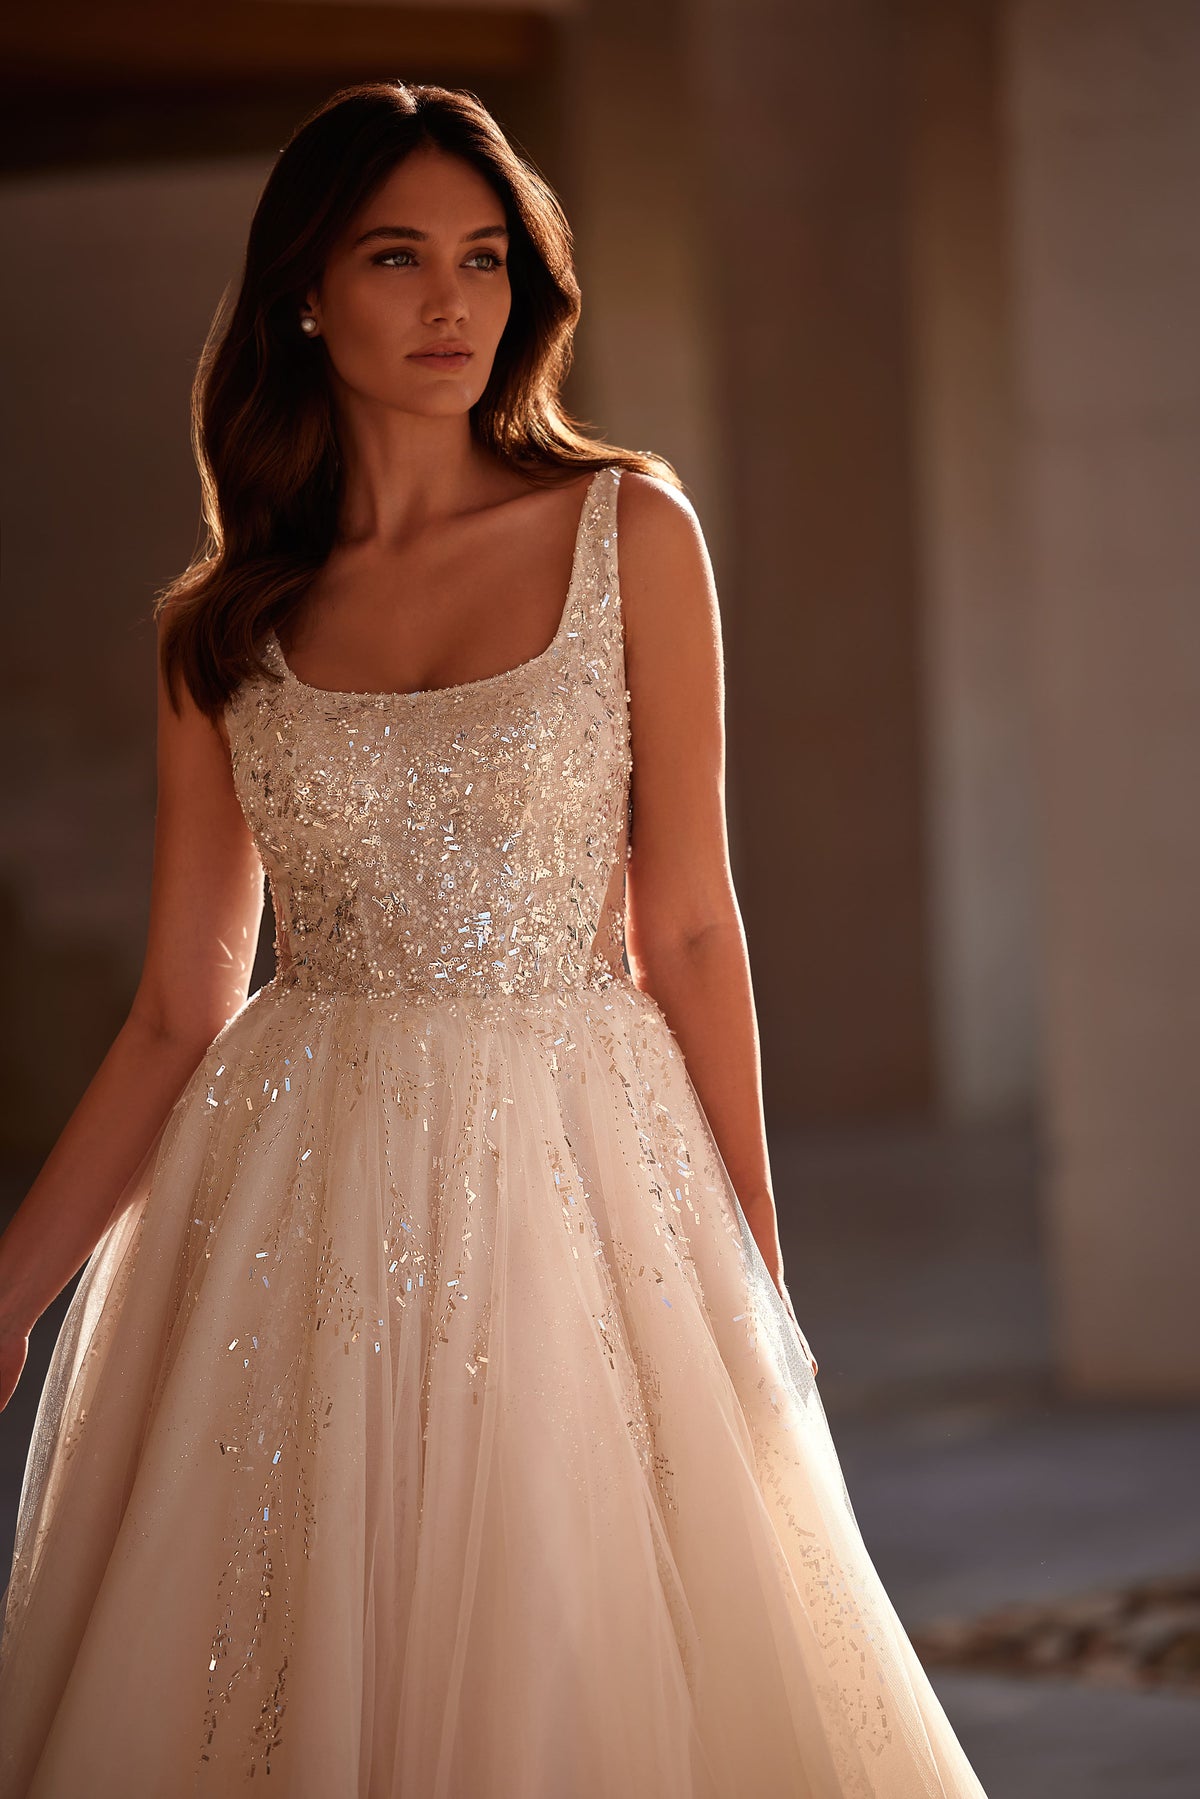 Beautiful Princess Sparkle Square Neckline Wedding Dress Sleeveless Style U Shape Open Back Detachable Cape Aline Silhouette Bridal Gown